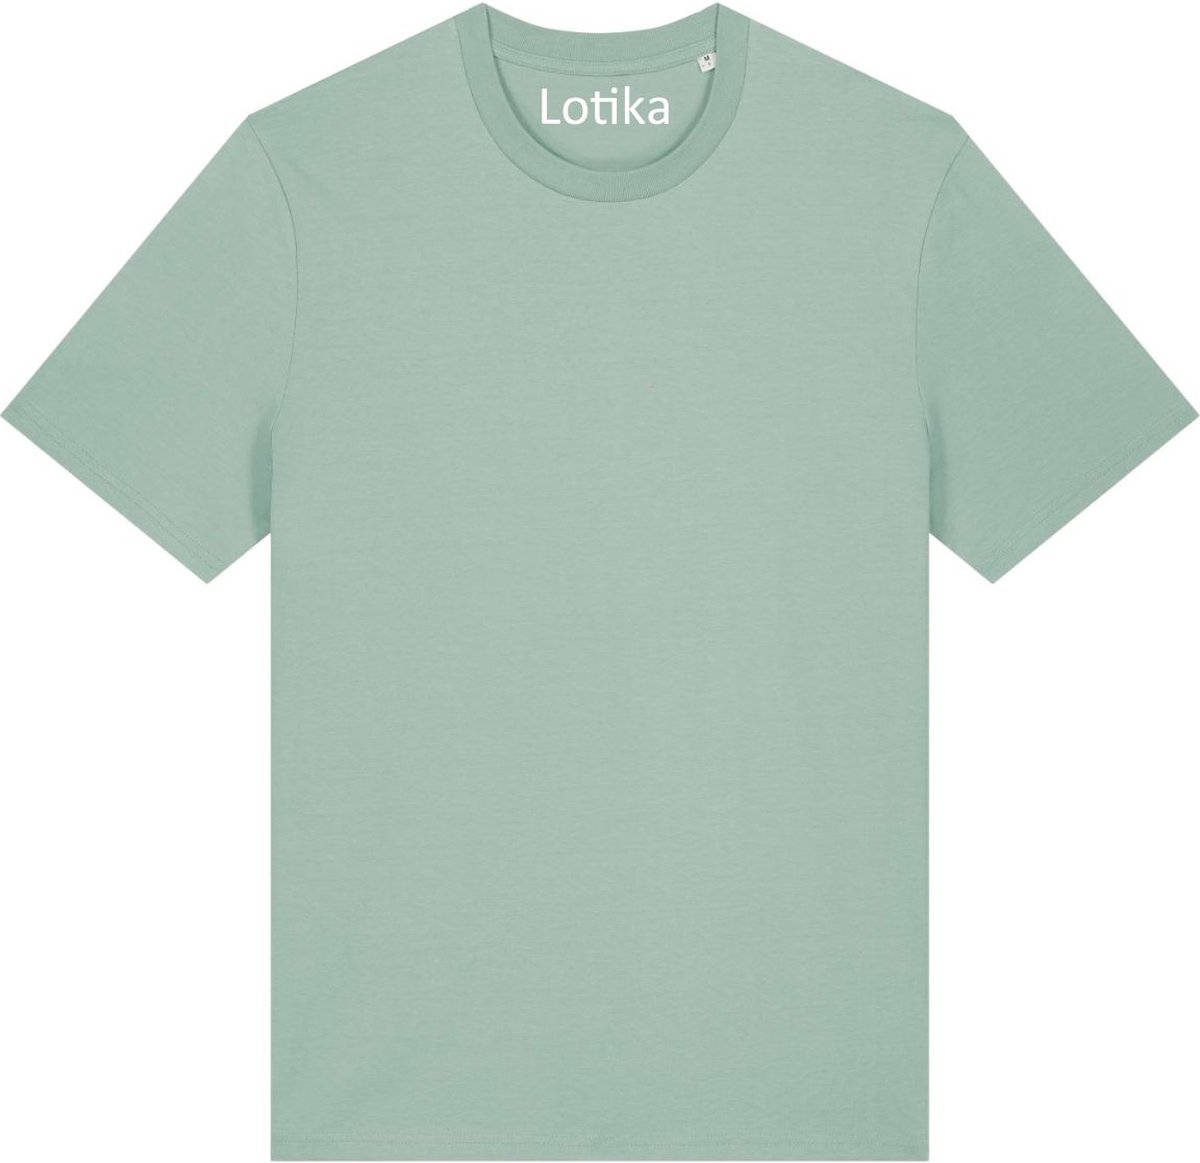 Lotika - Juul T-shirt biologisch katoen - aloe